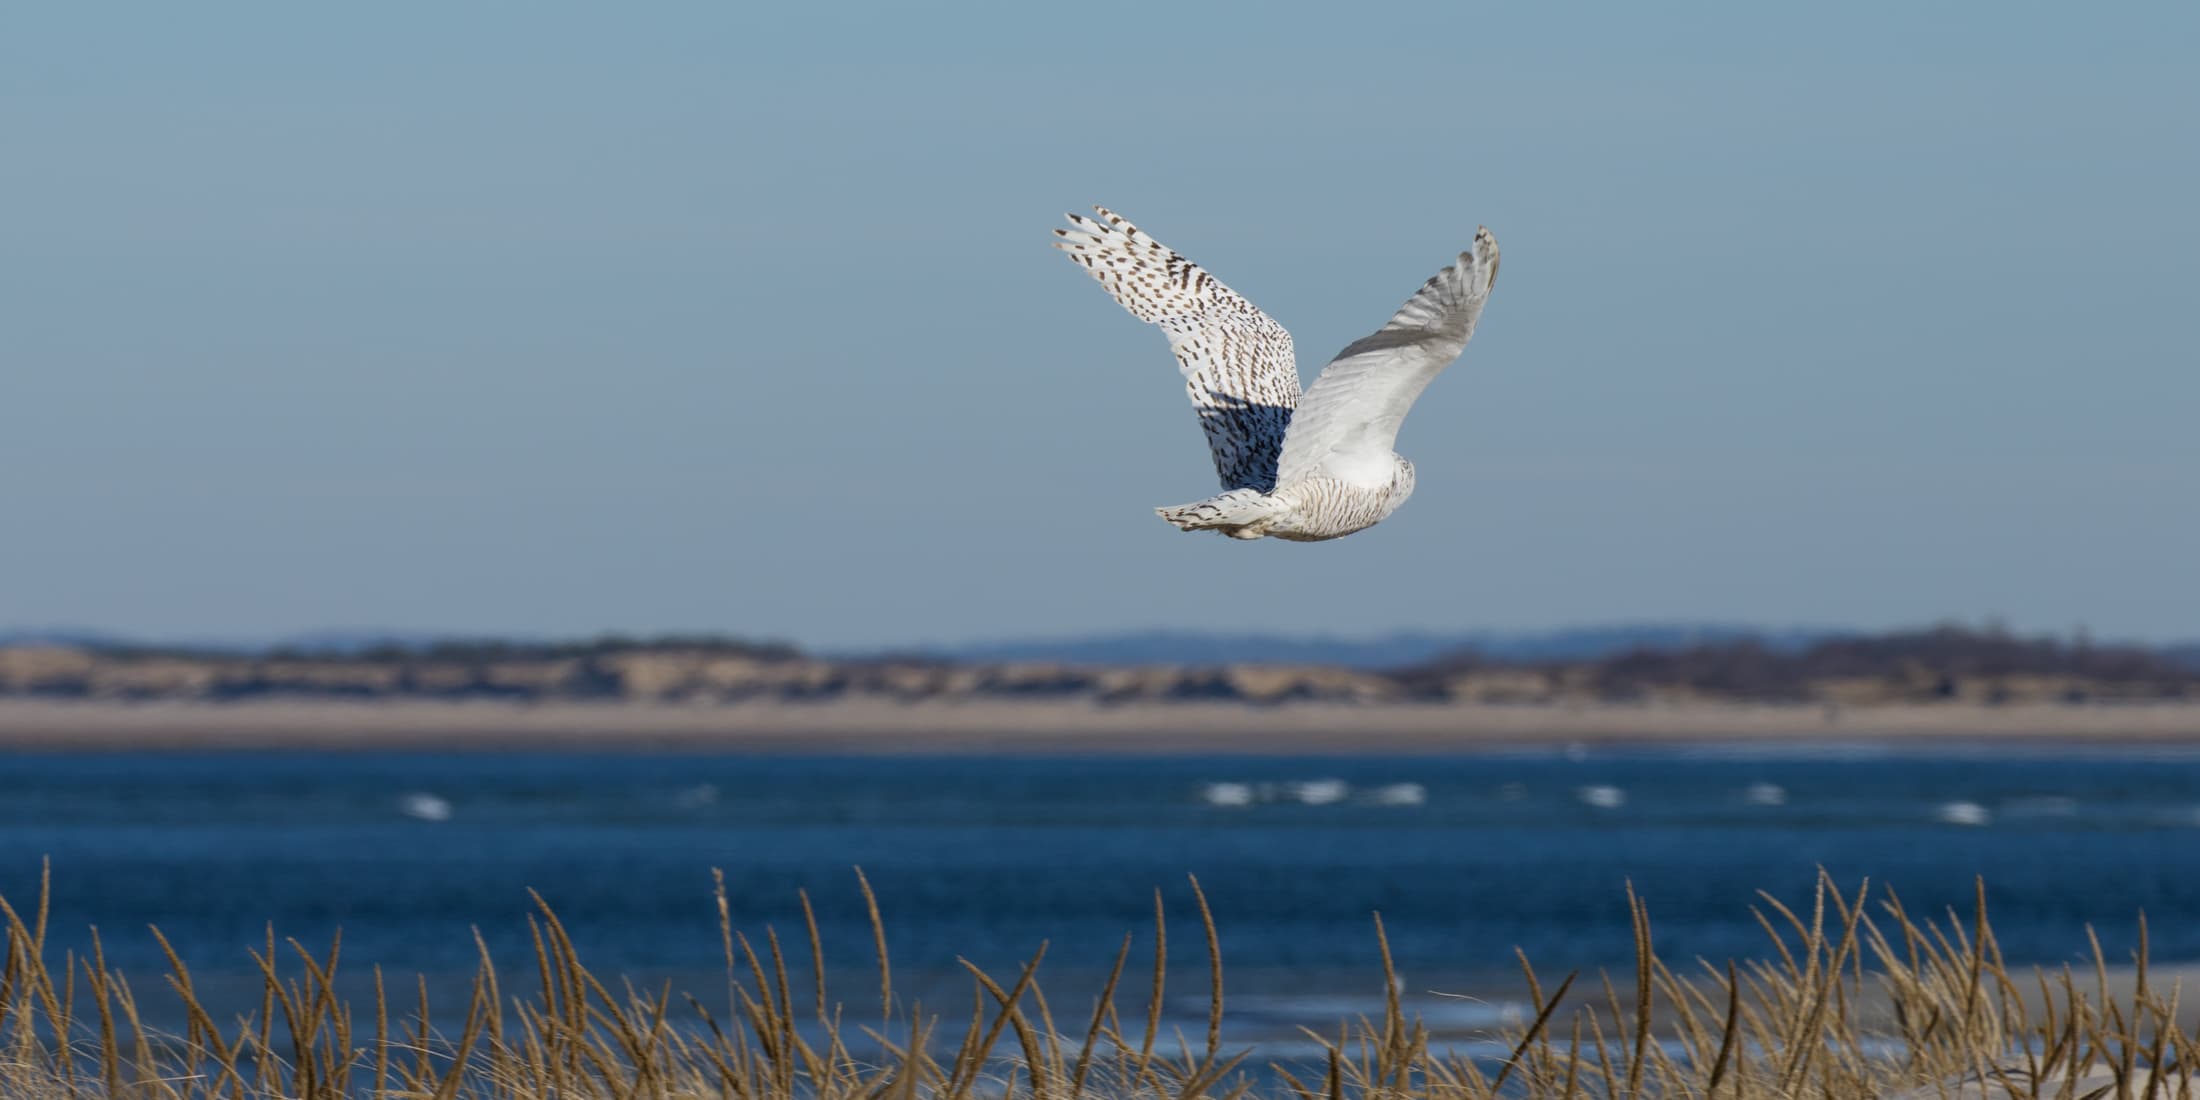 Snowy owl in flight on Crane Beach